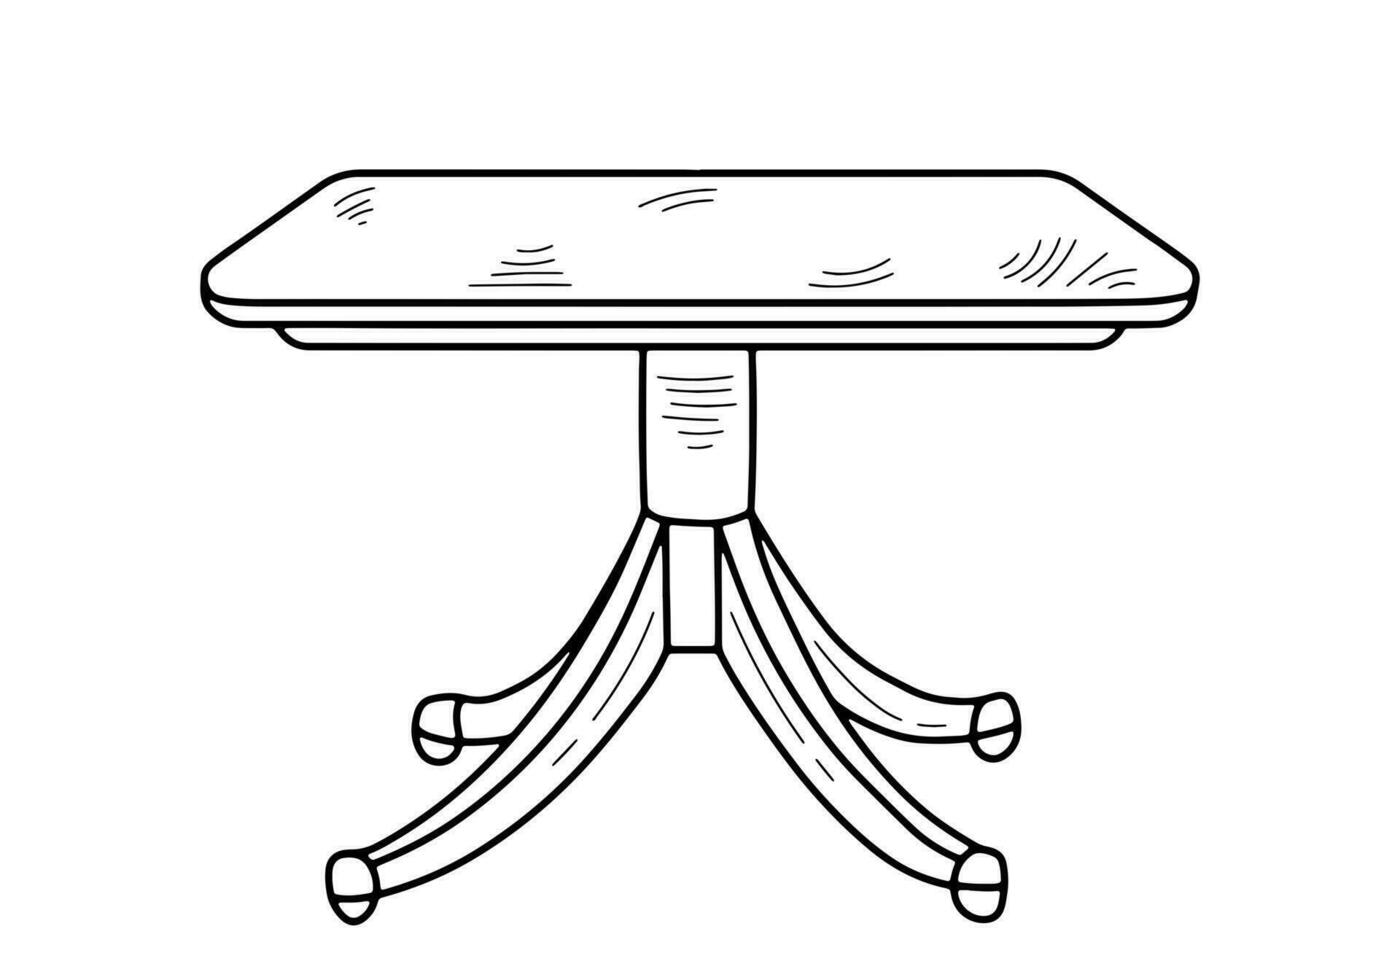 Sketch of a table, desk, diet table, desktop, kitchen table. Piece of furniture. Furniture for bedroom, study, living room, kitchen vector